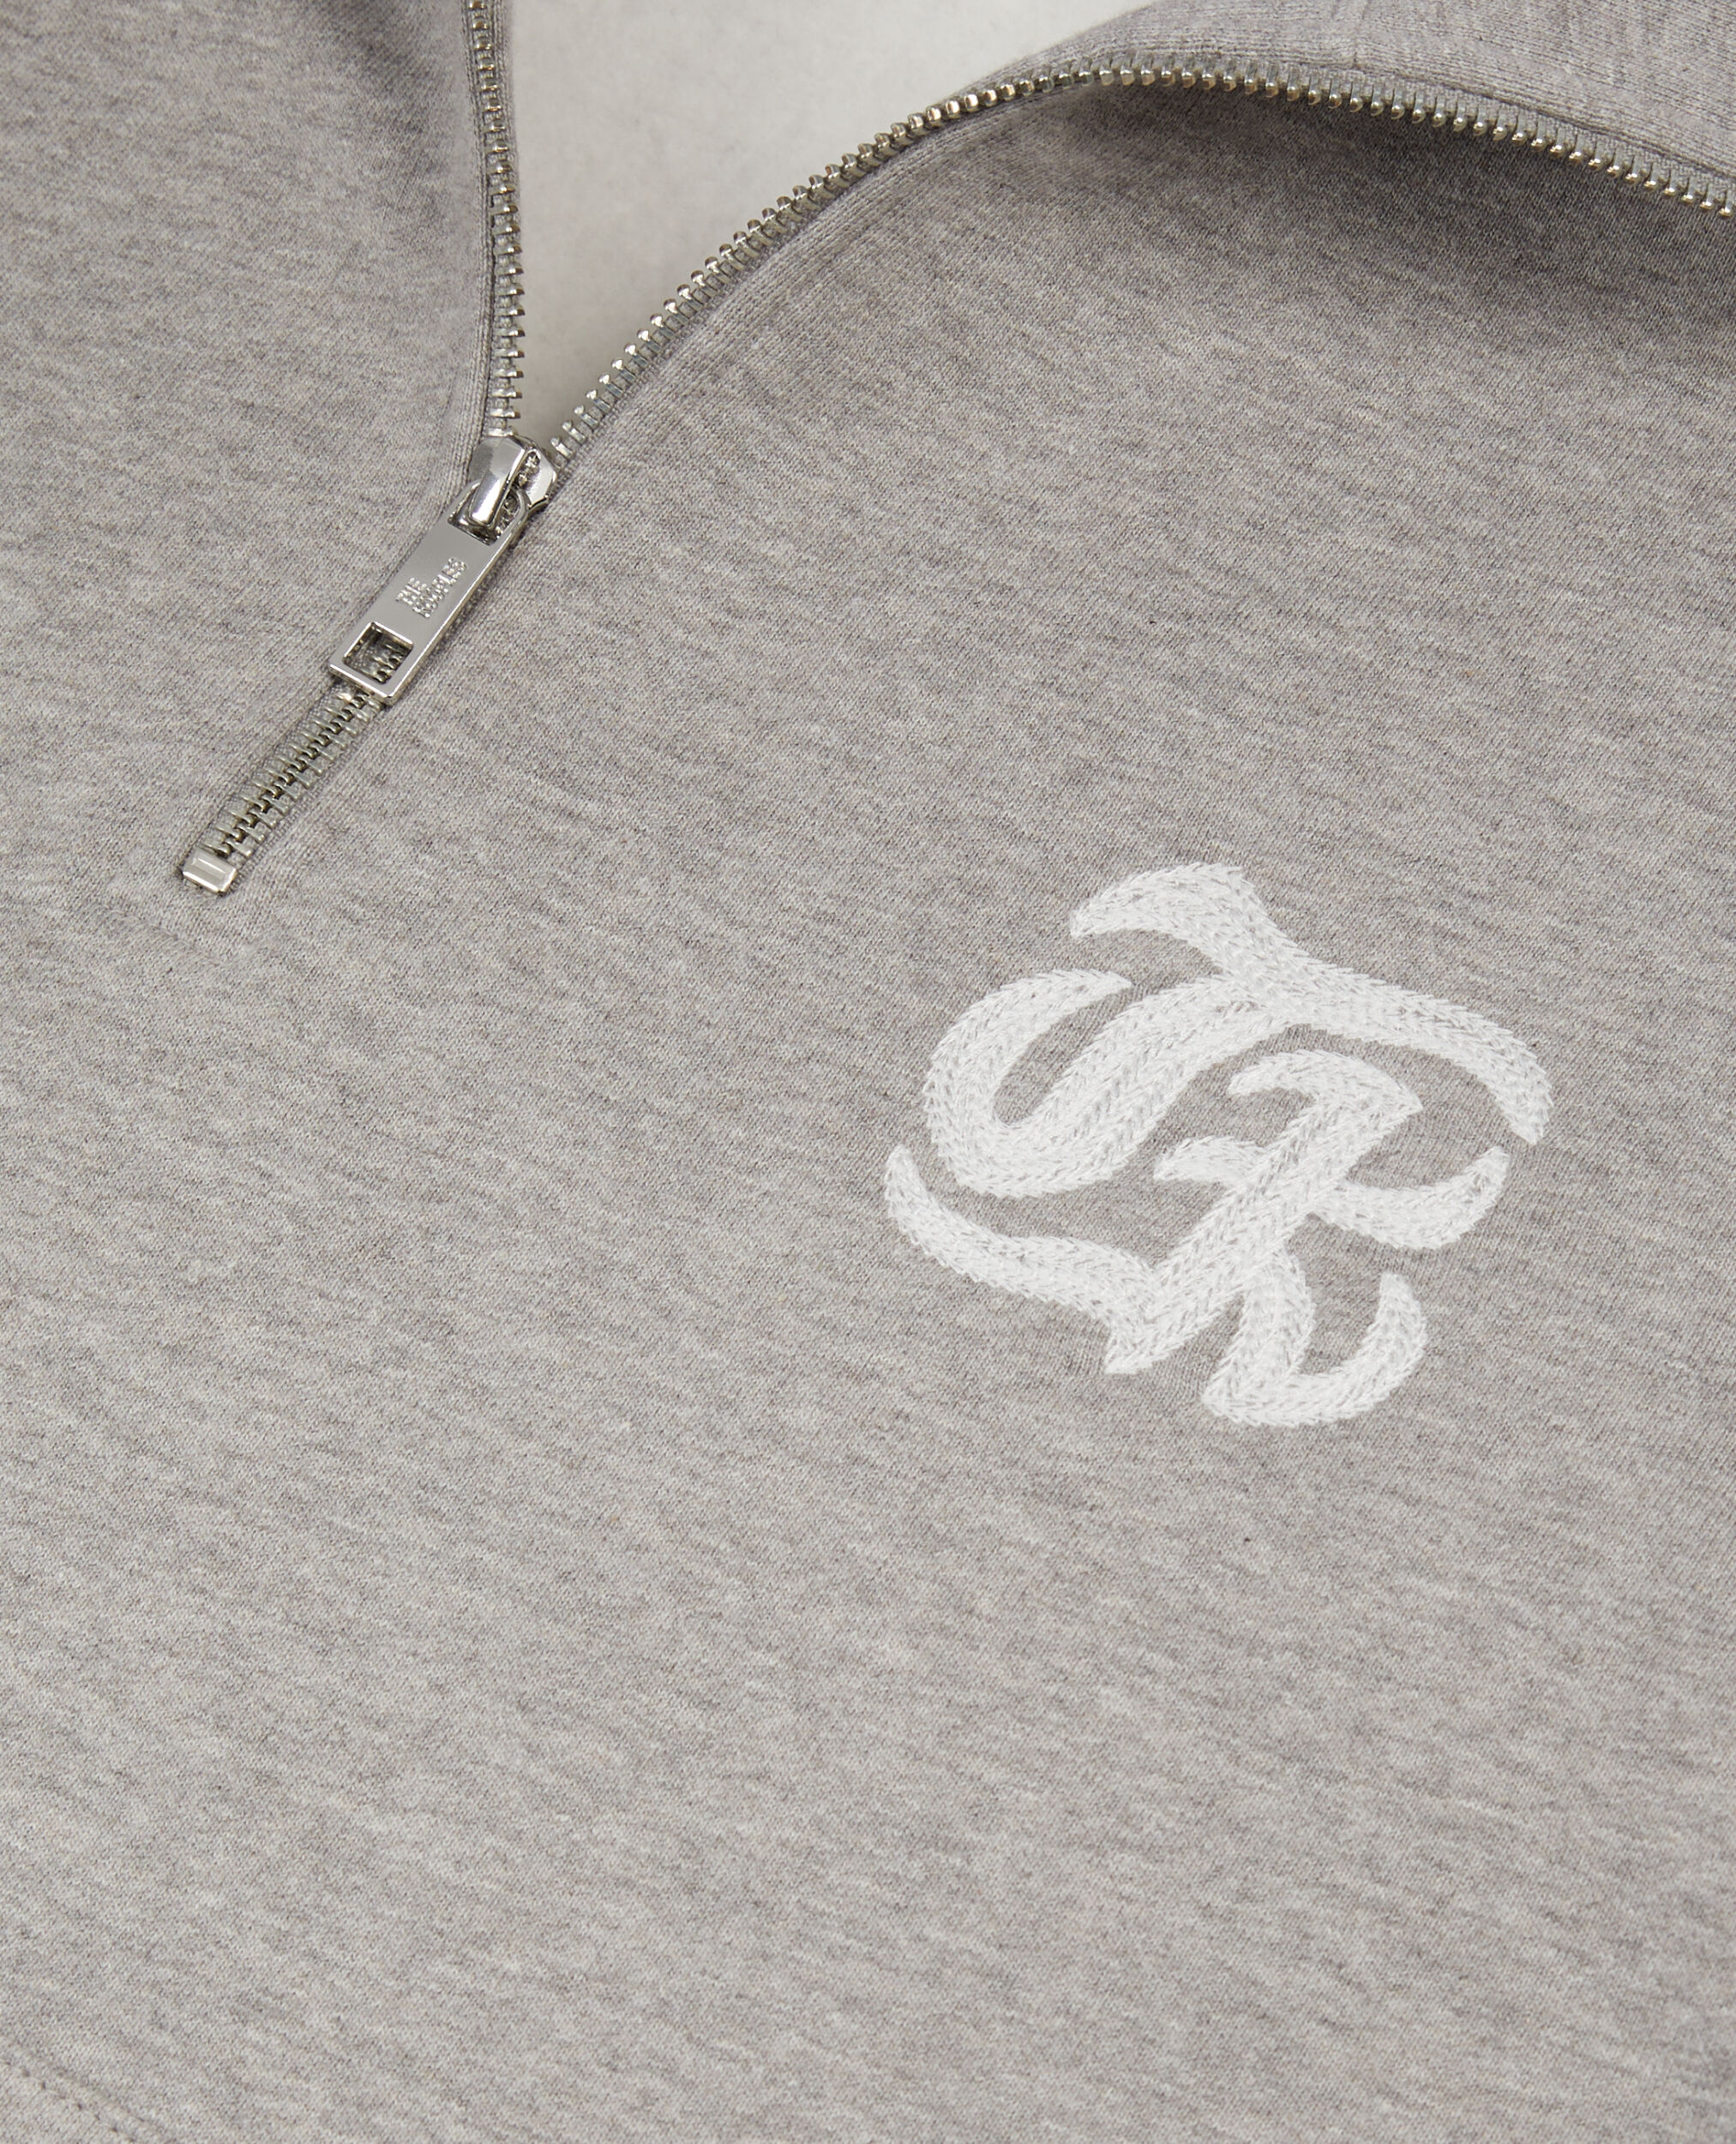 Grey sweatshirt with Blazon serigraphy, ARDOISE, hi-res image number null